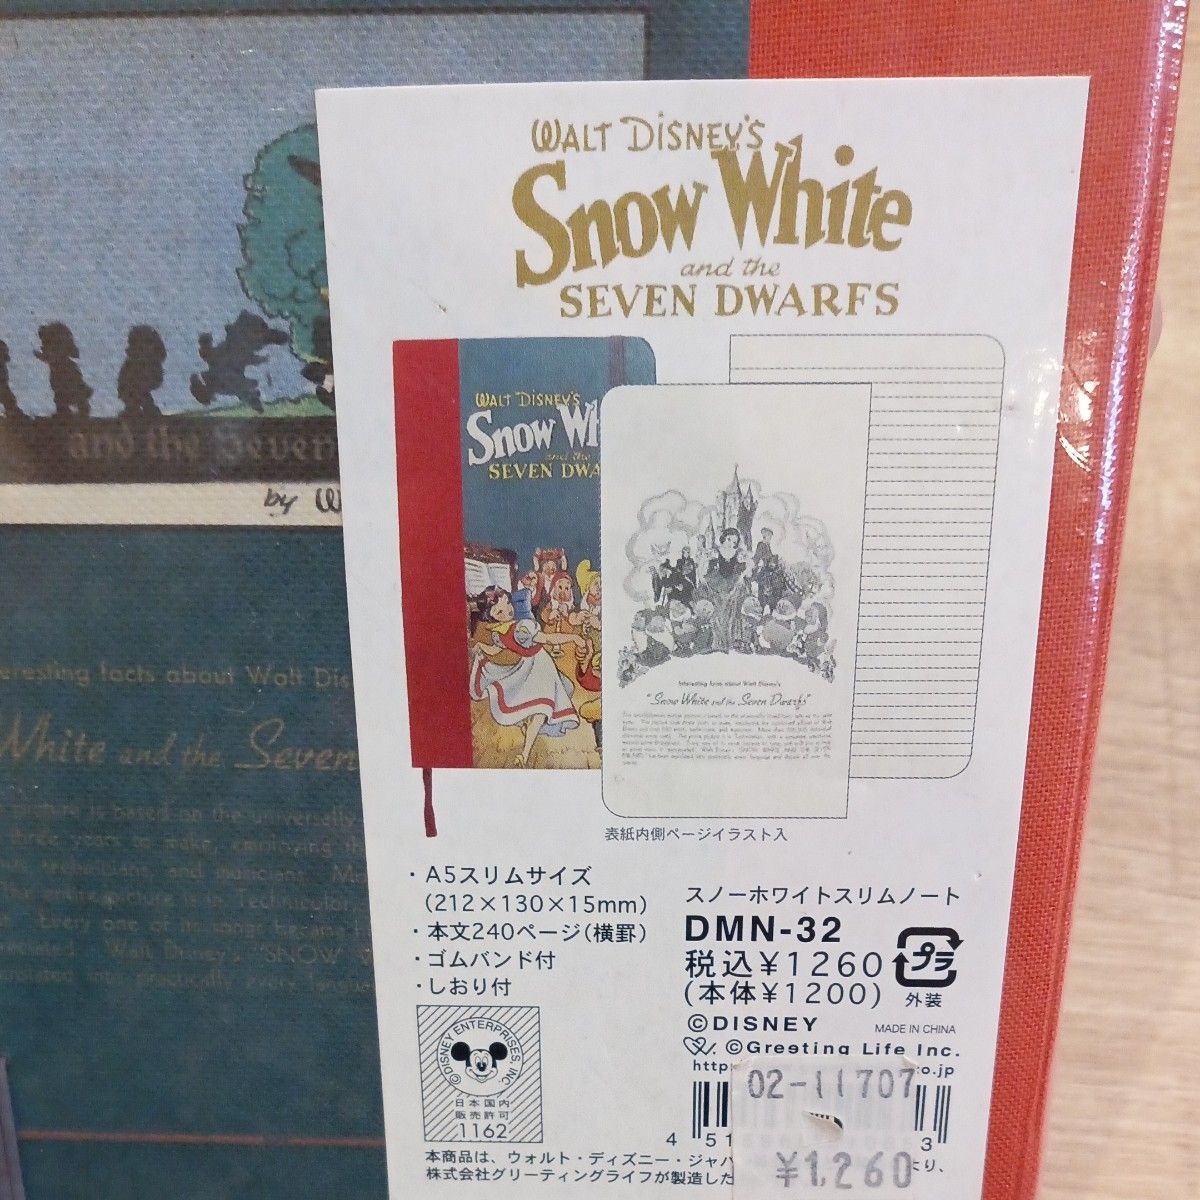 WALTDISNEY'S SNOW WHITE SEVEN DWARFS ウォルトディズニースノーホワイトスリムノートキャラ未開封